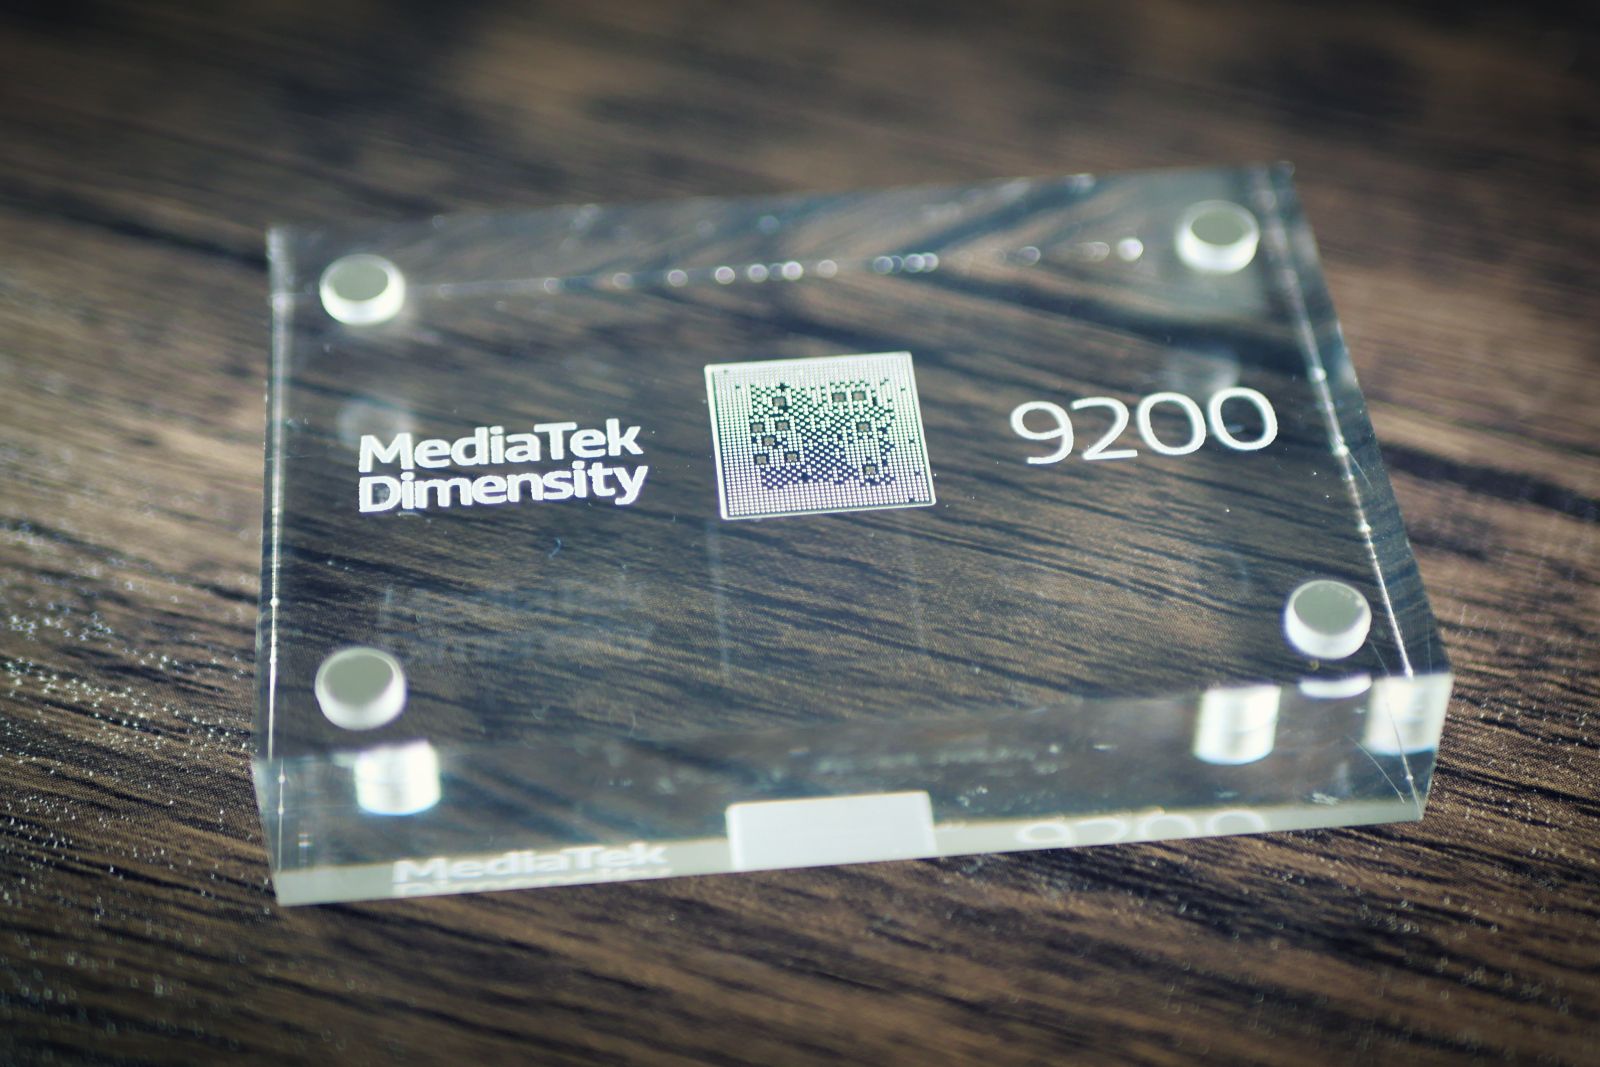 MediaTek launches the Dimensity 9200 chipset for next gen flagship smartphones photo 1